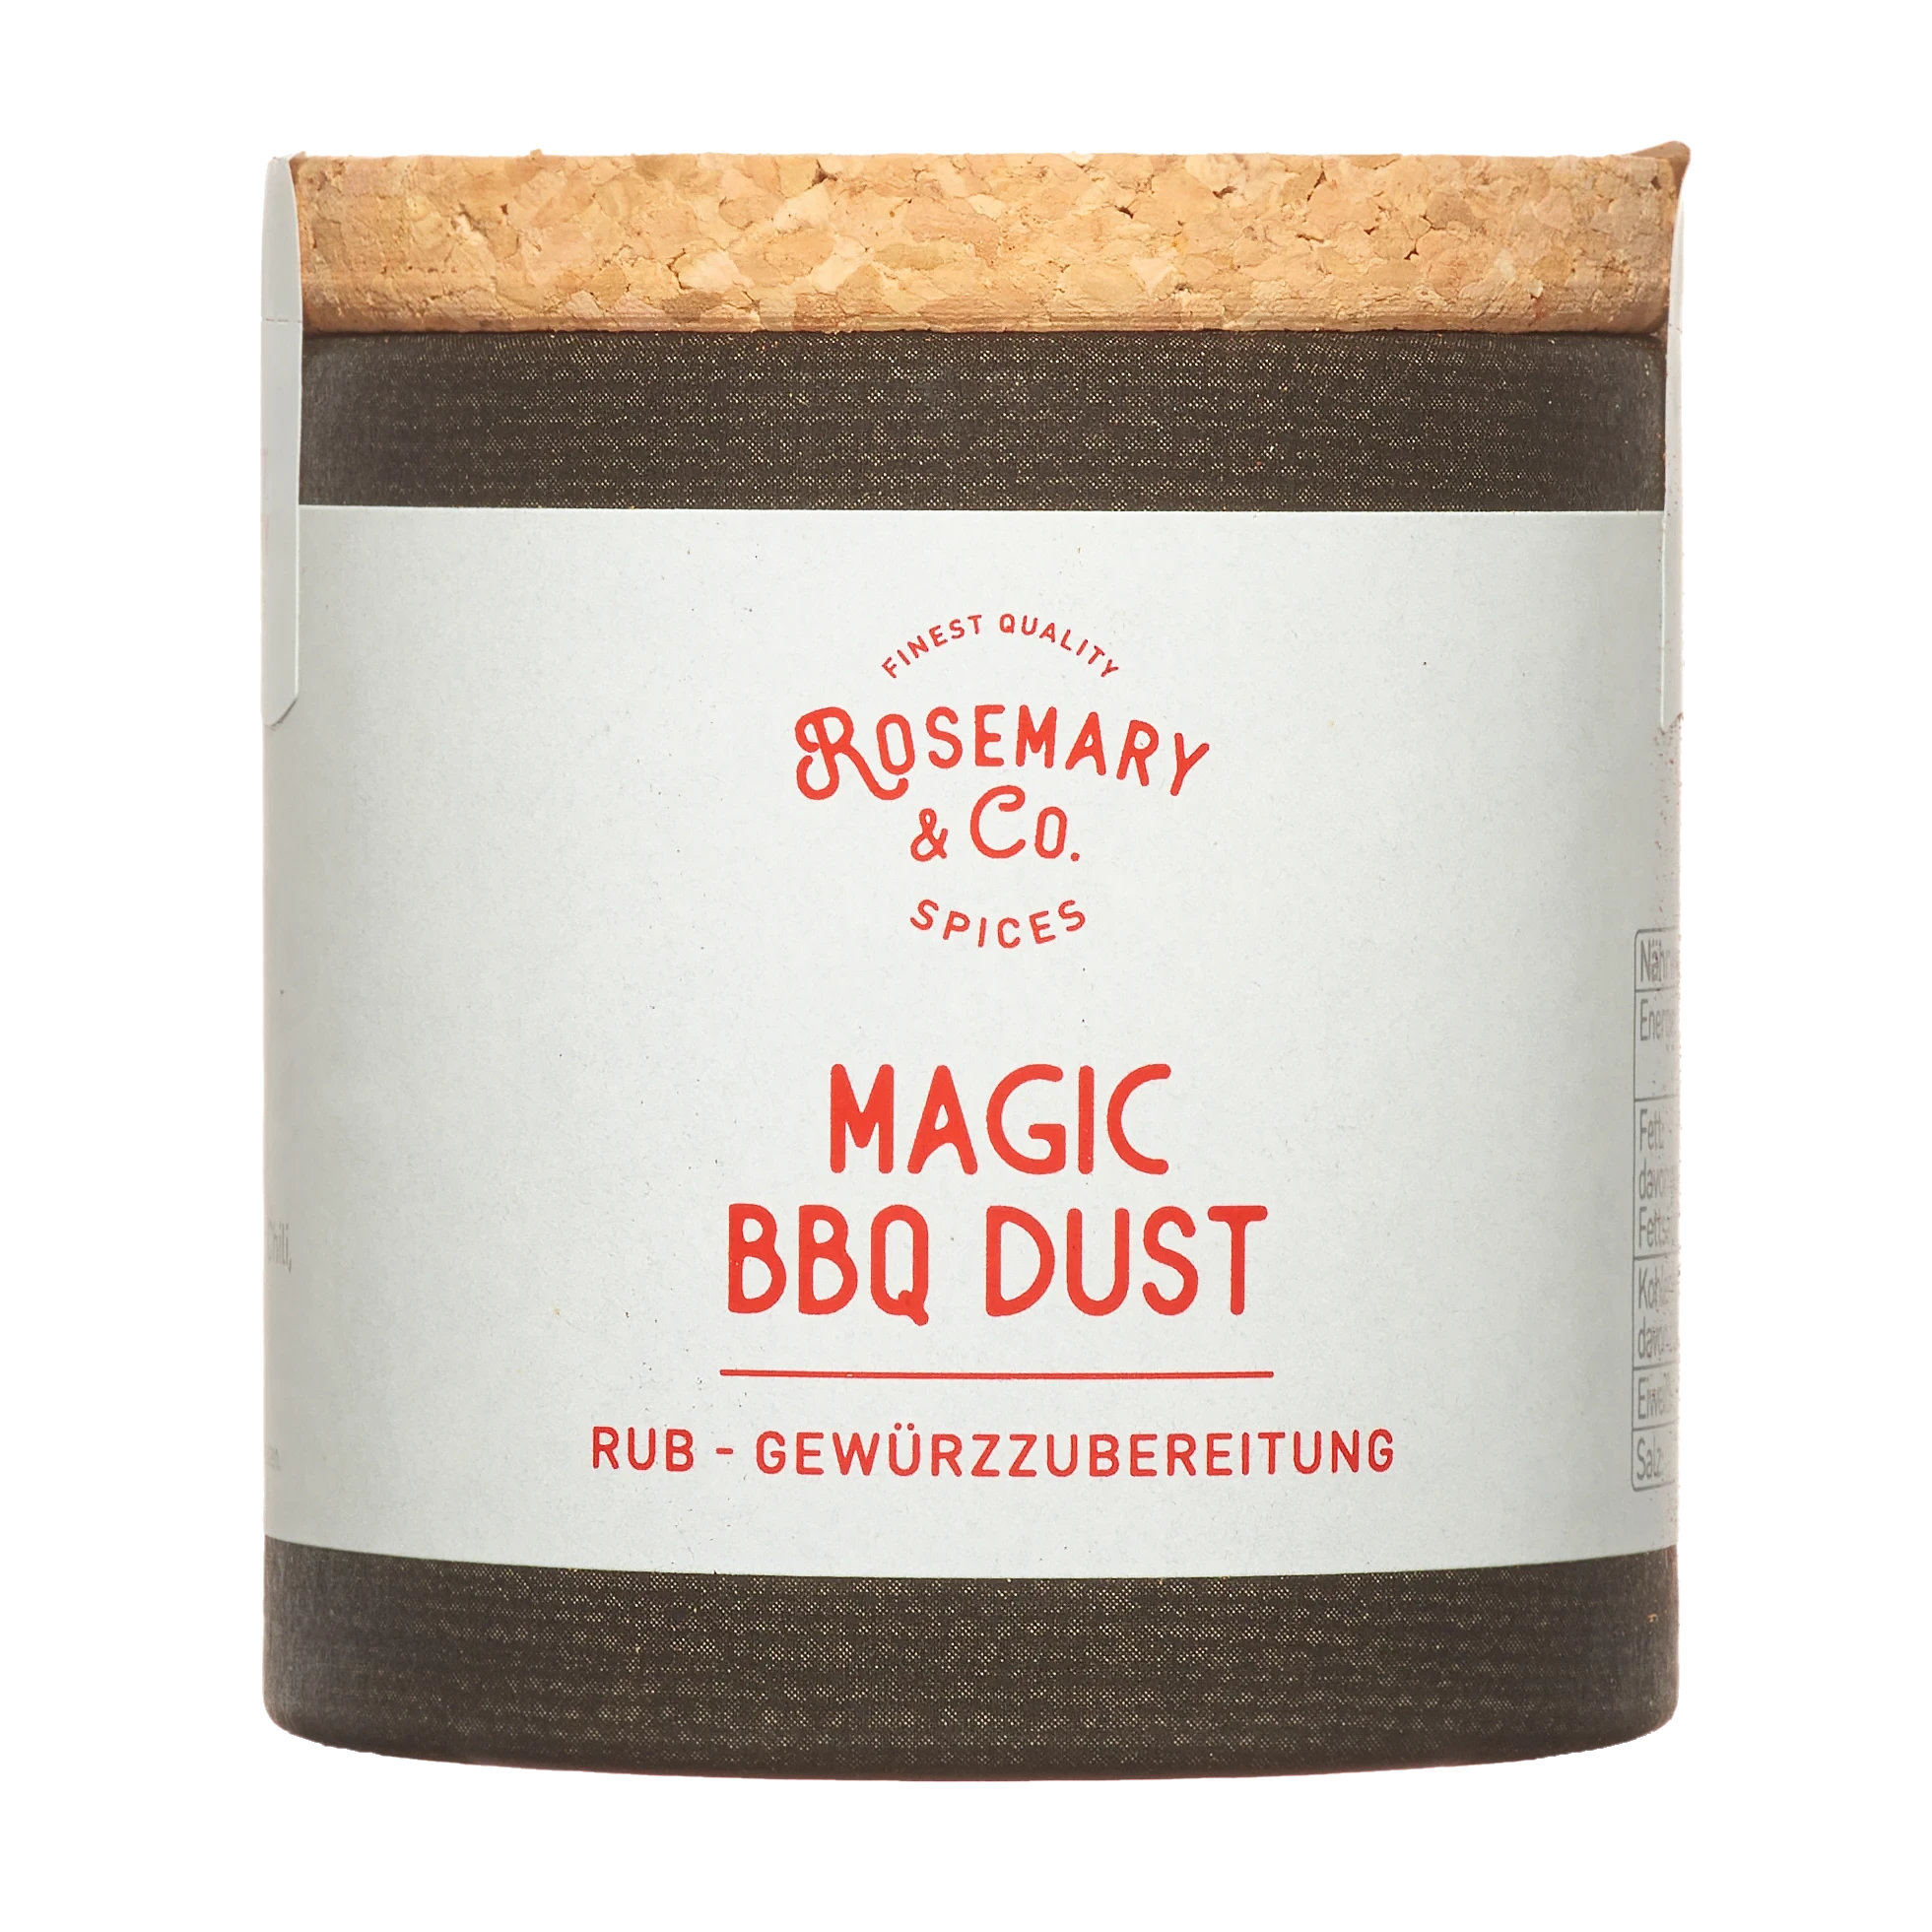 Rosemary Co Magic Bbq Dust Rub Gewuerzzubereitung Korkdose 60g 1